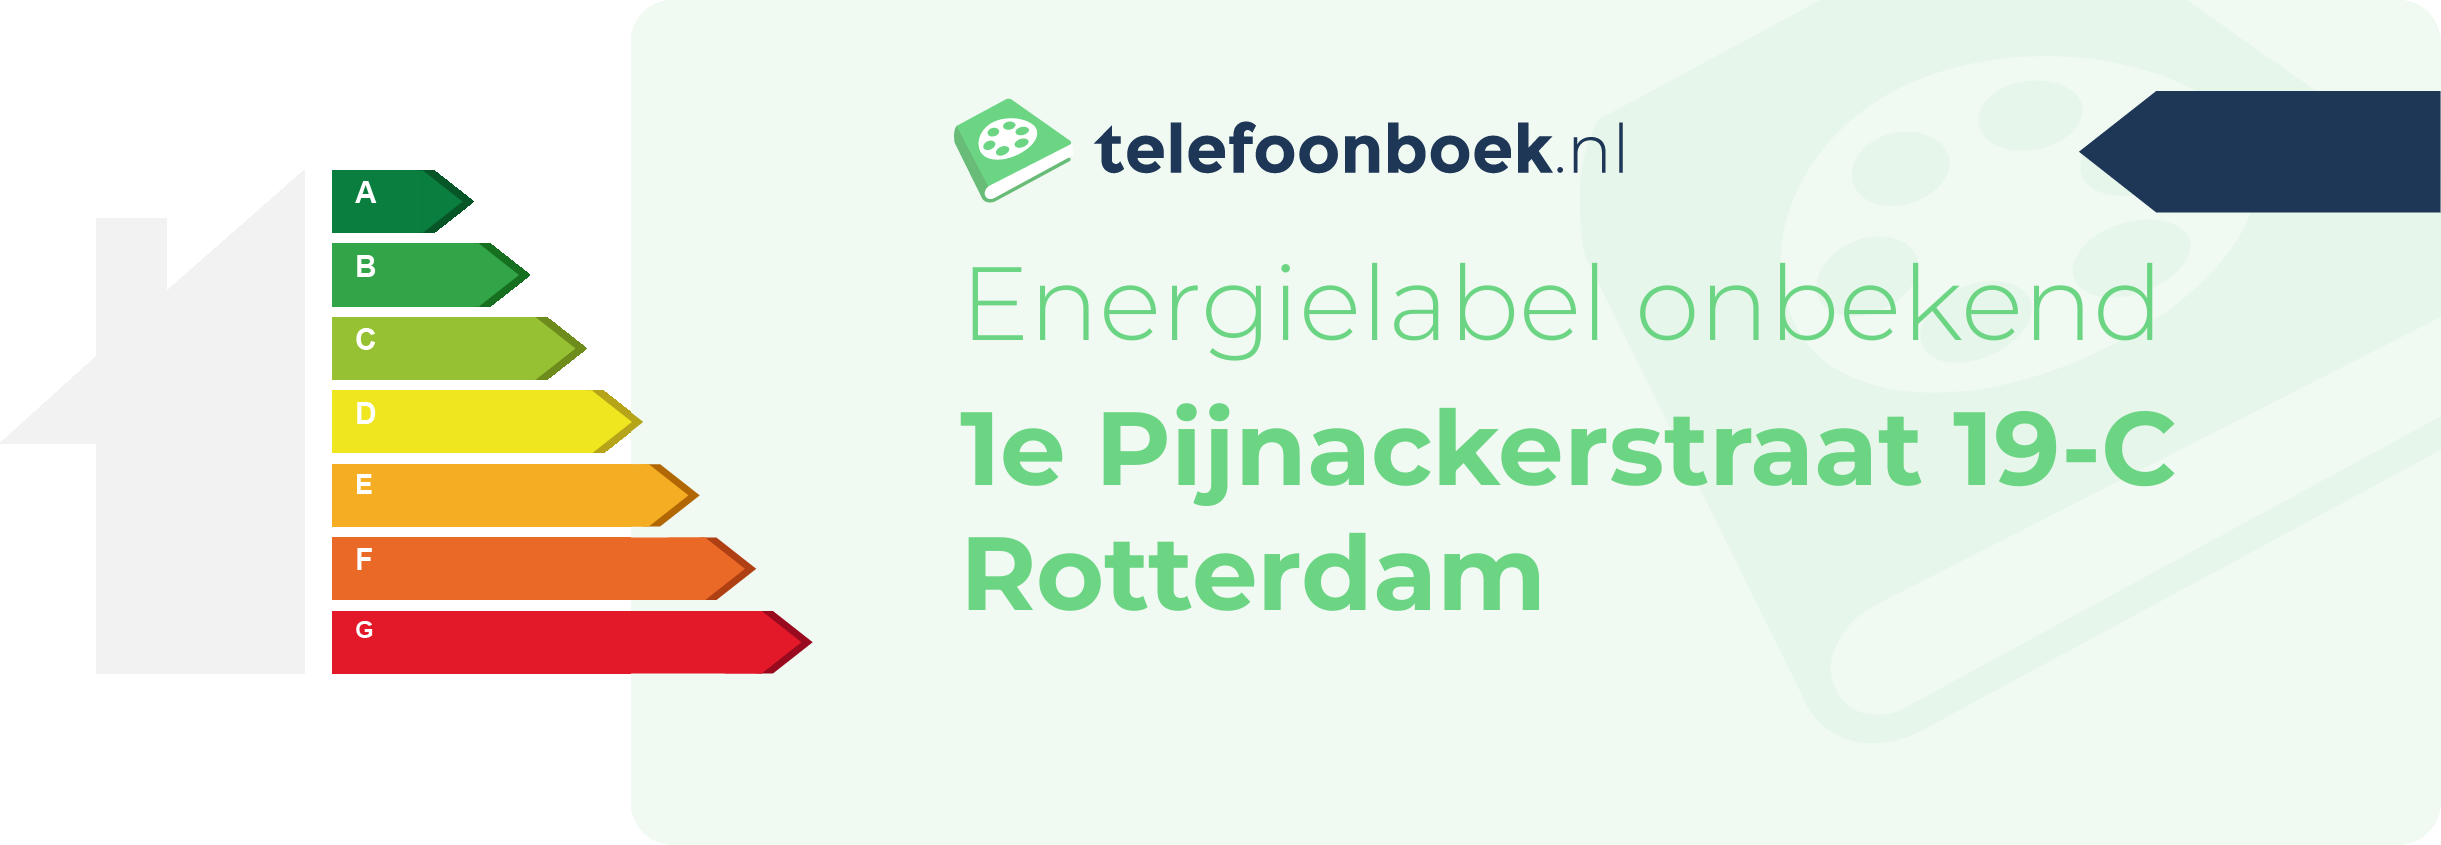 Energielabel 1e Pijnackerstraat 19-C Rotterdam